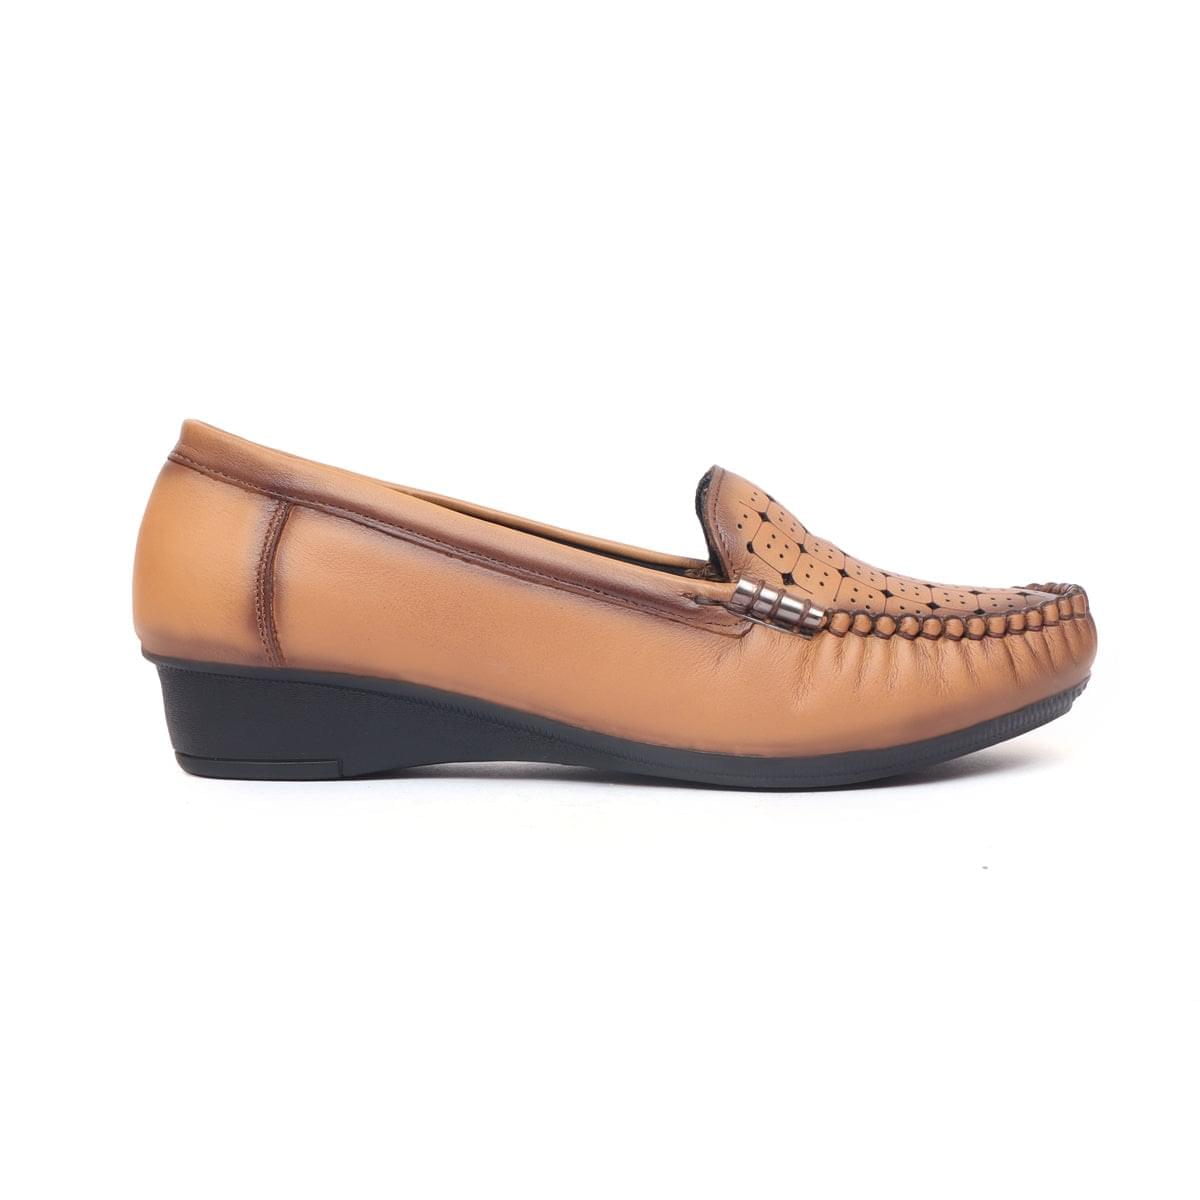 Slip on Shoes for Women Beige_1